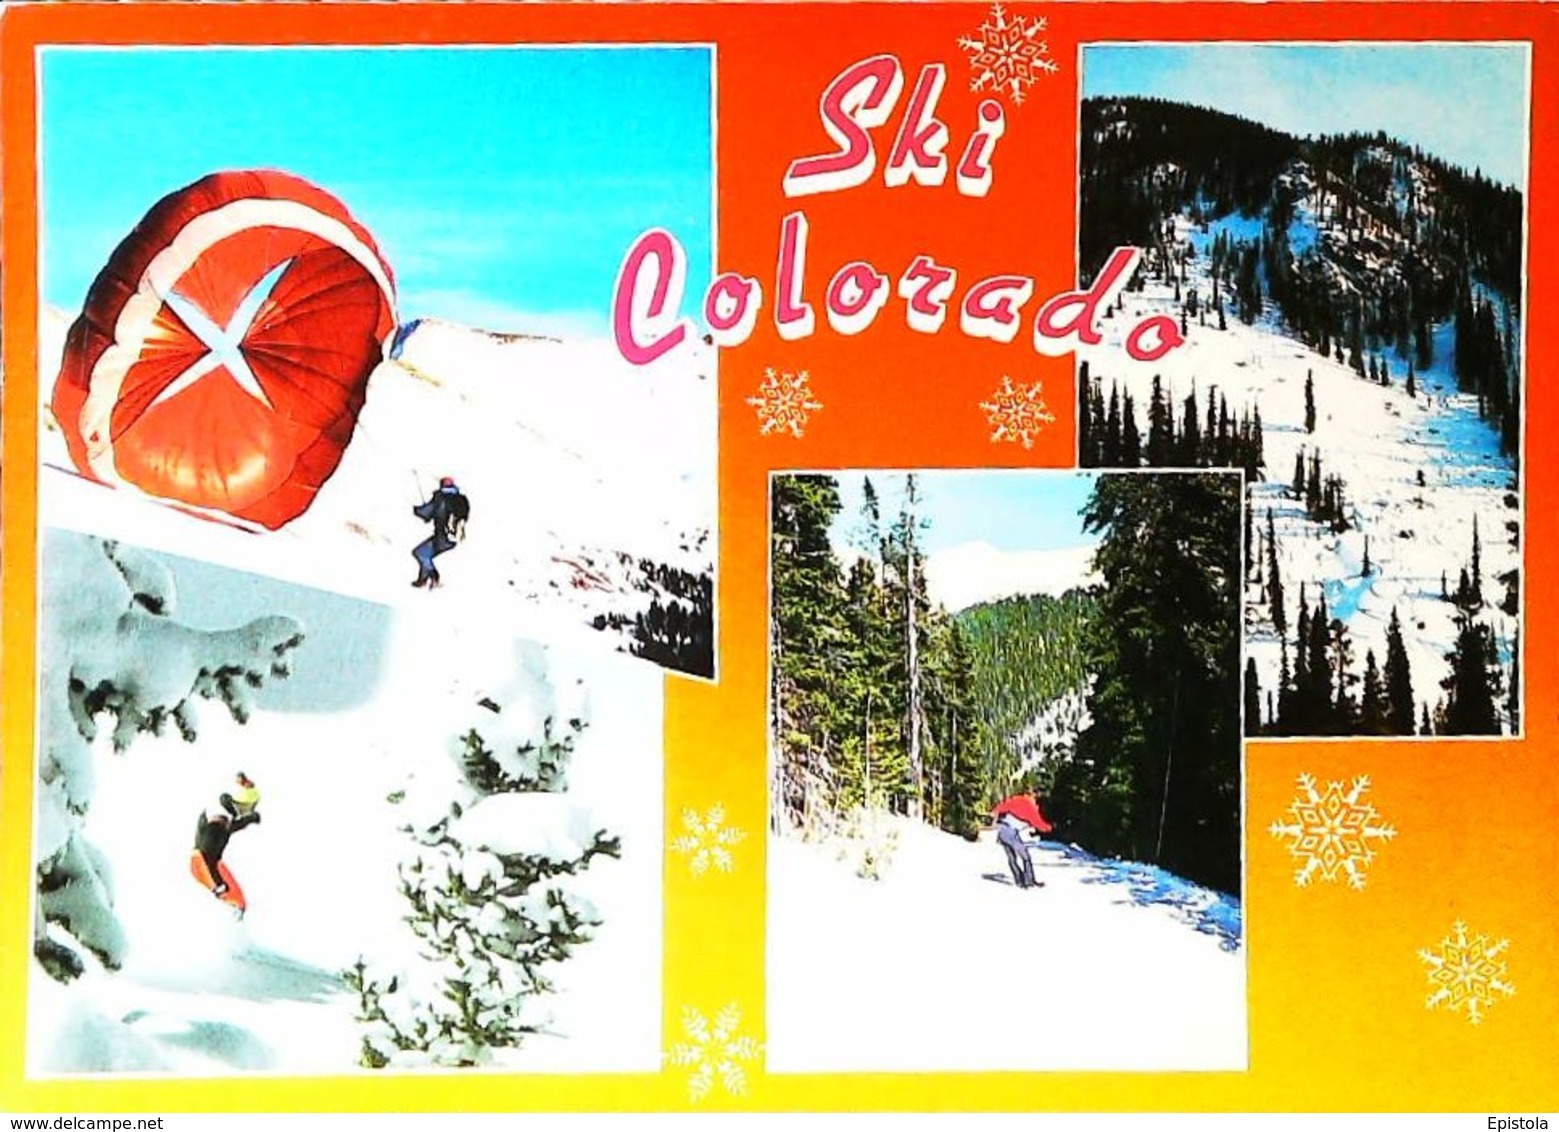 Parachutisme à Ski  "Ski Country & Parachuting" COLORADO -Edt Boulder Co. -  CPM 1980s - Parachutisme